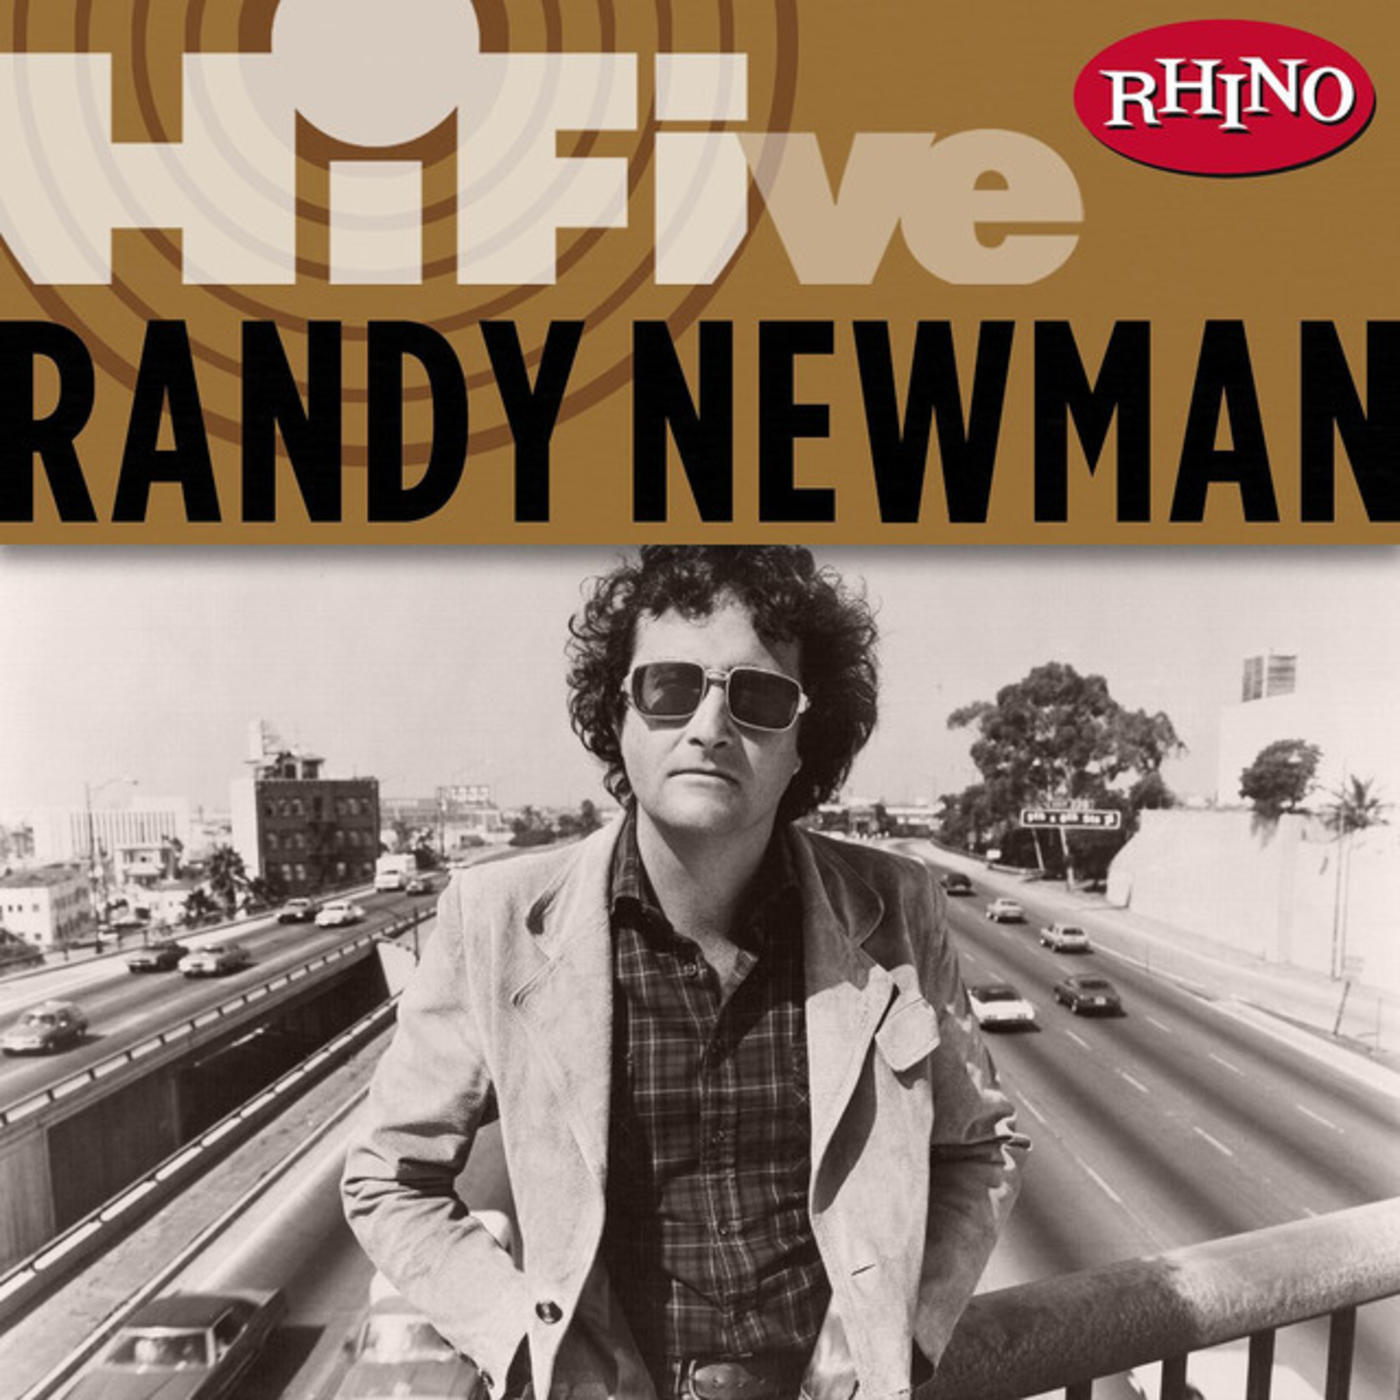 Rhino Hi-Five: Randy Newman